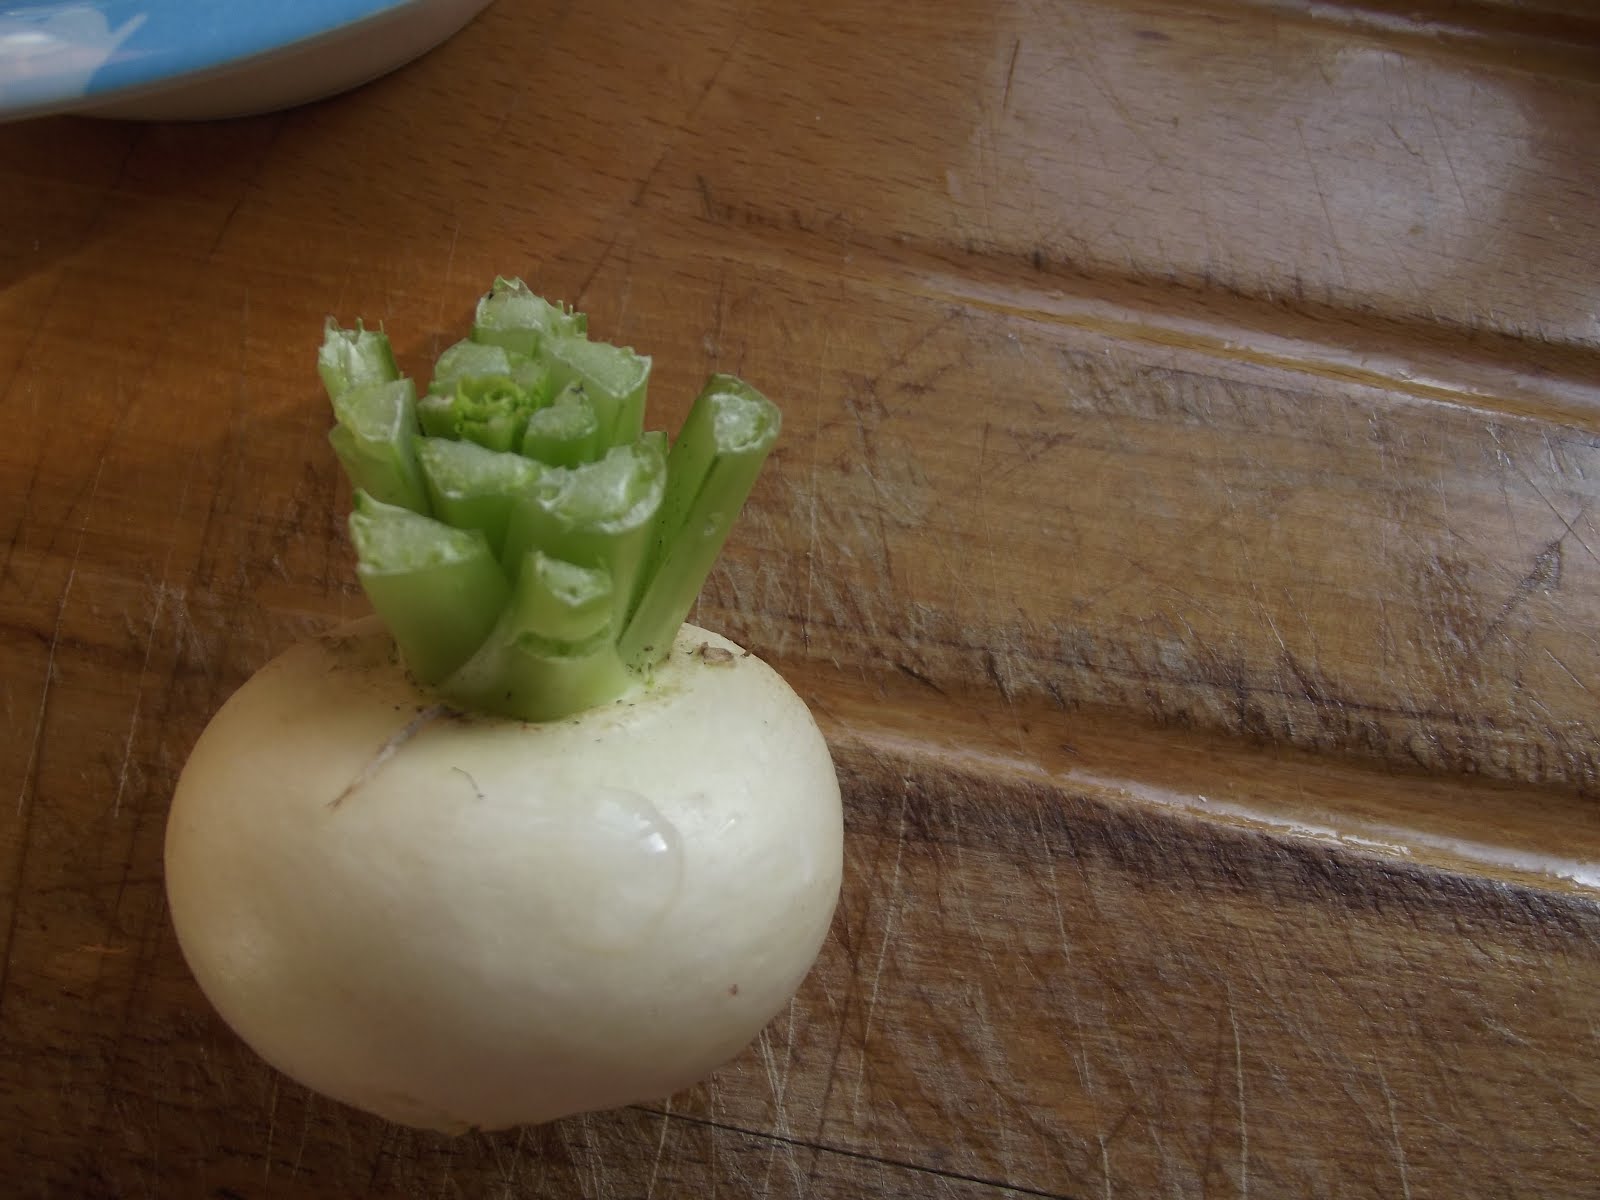 Nice little turnip!